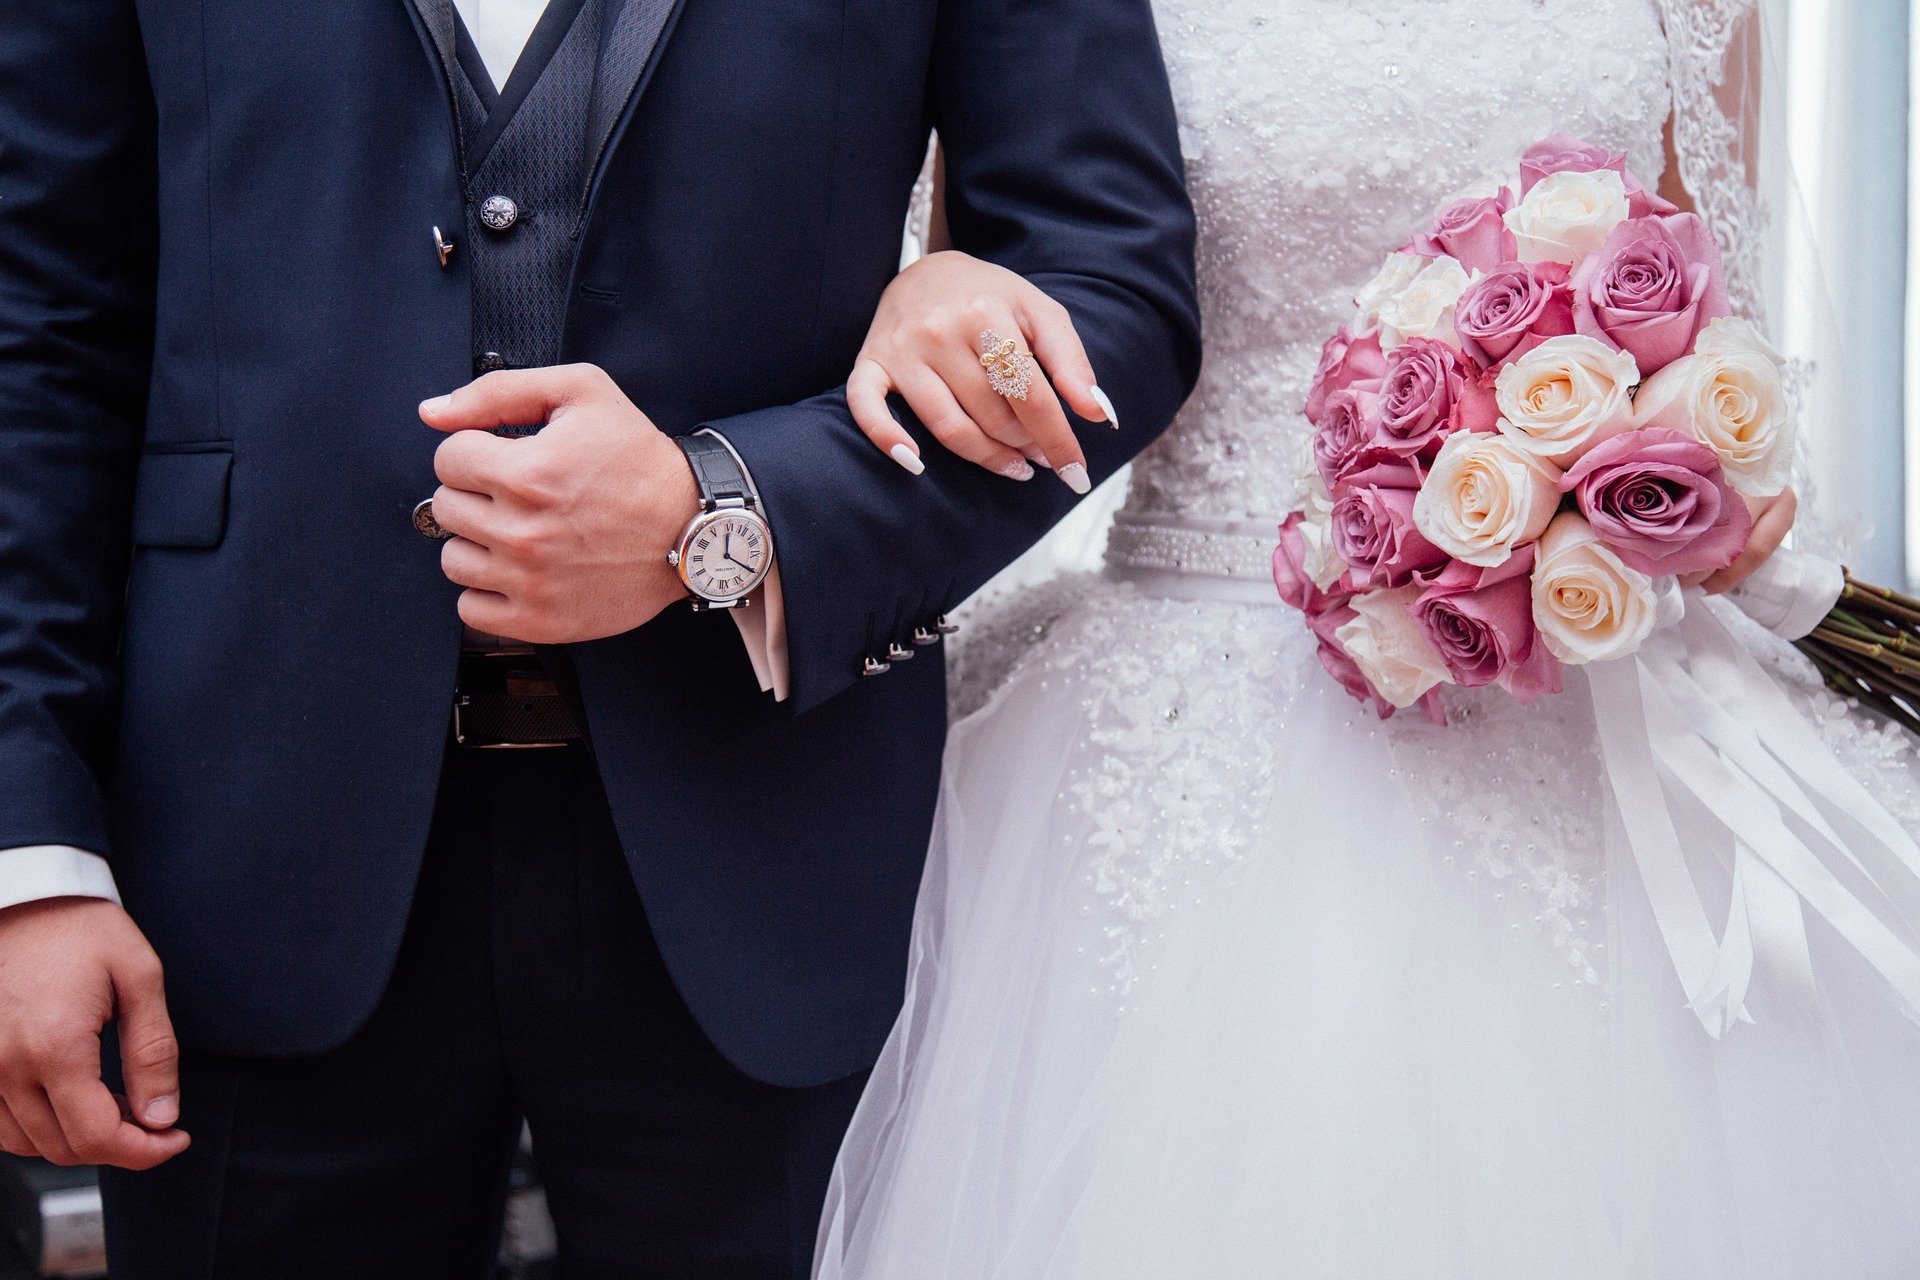 Wedding (StockSnap/Pixabay)